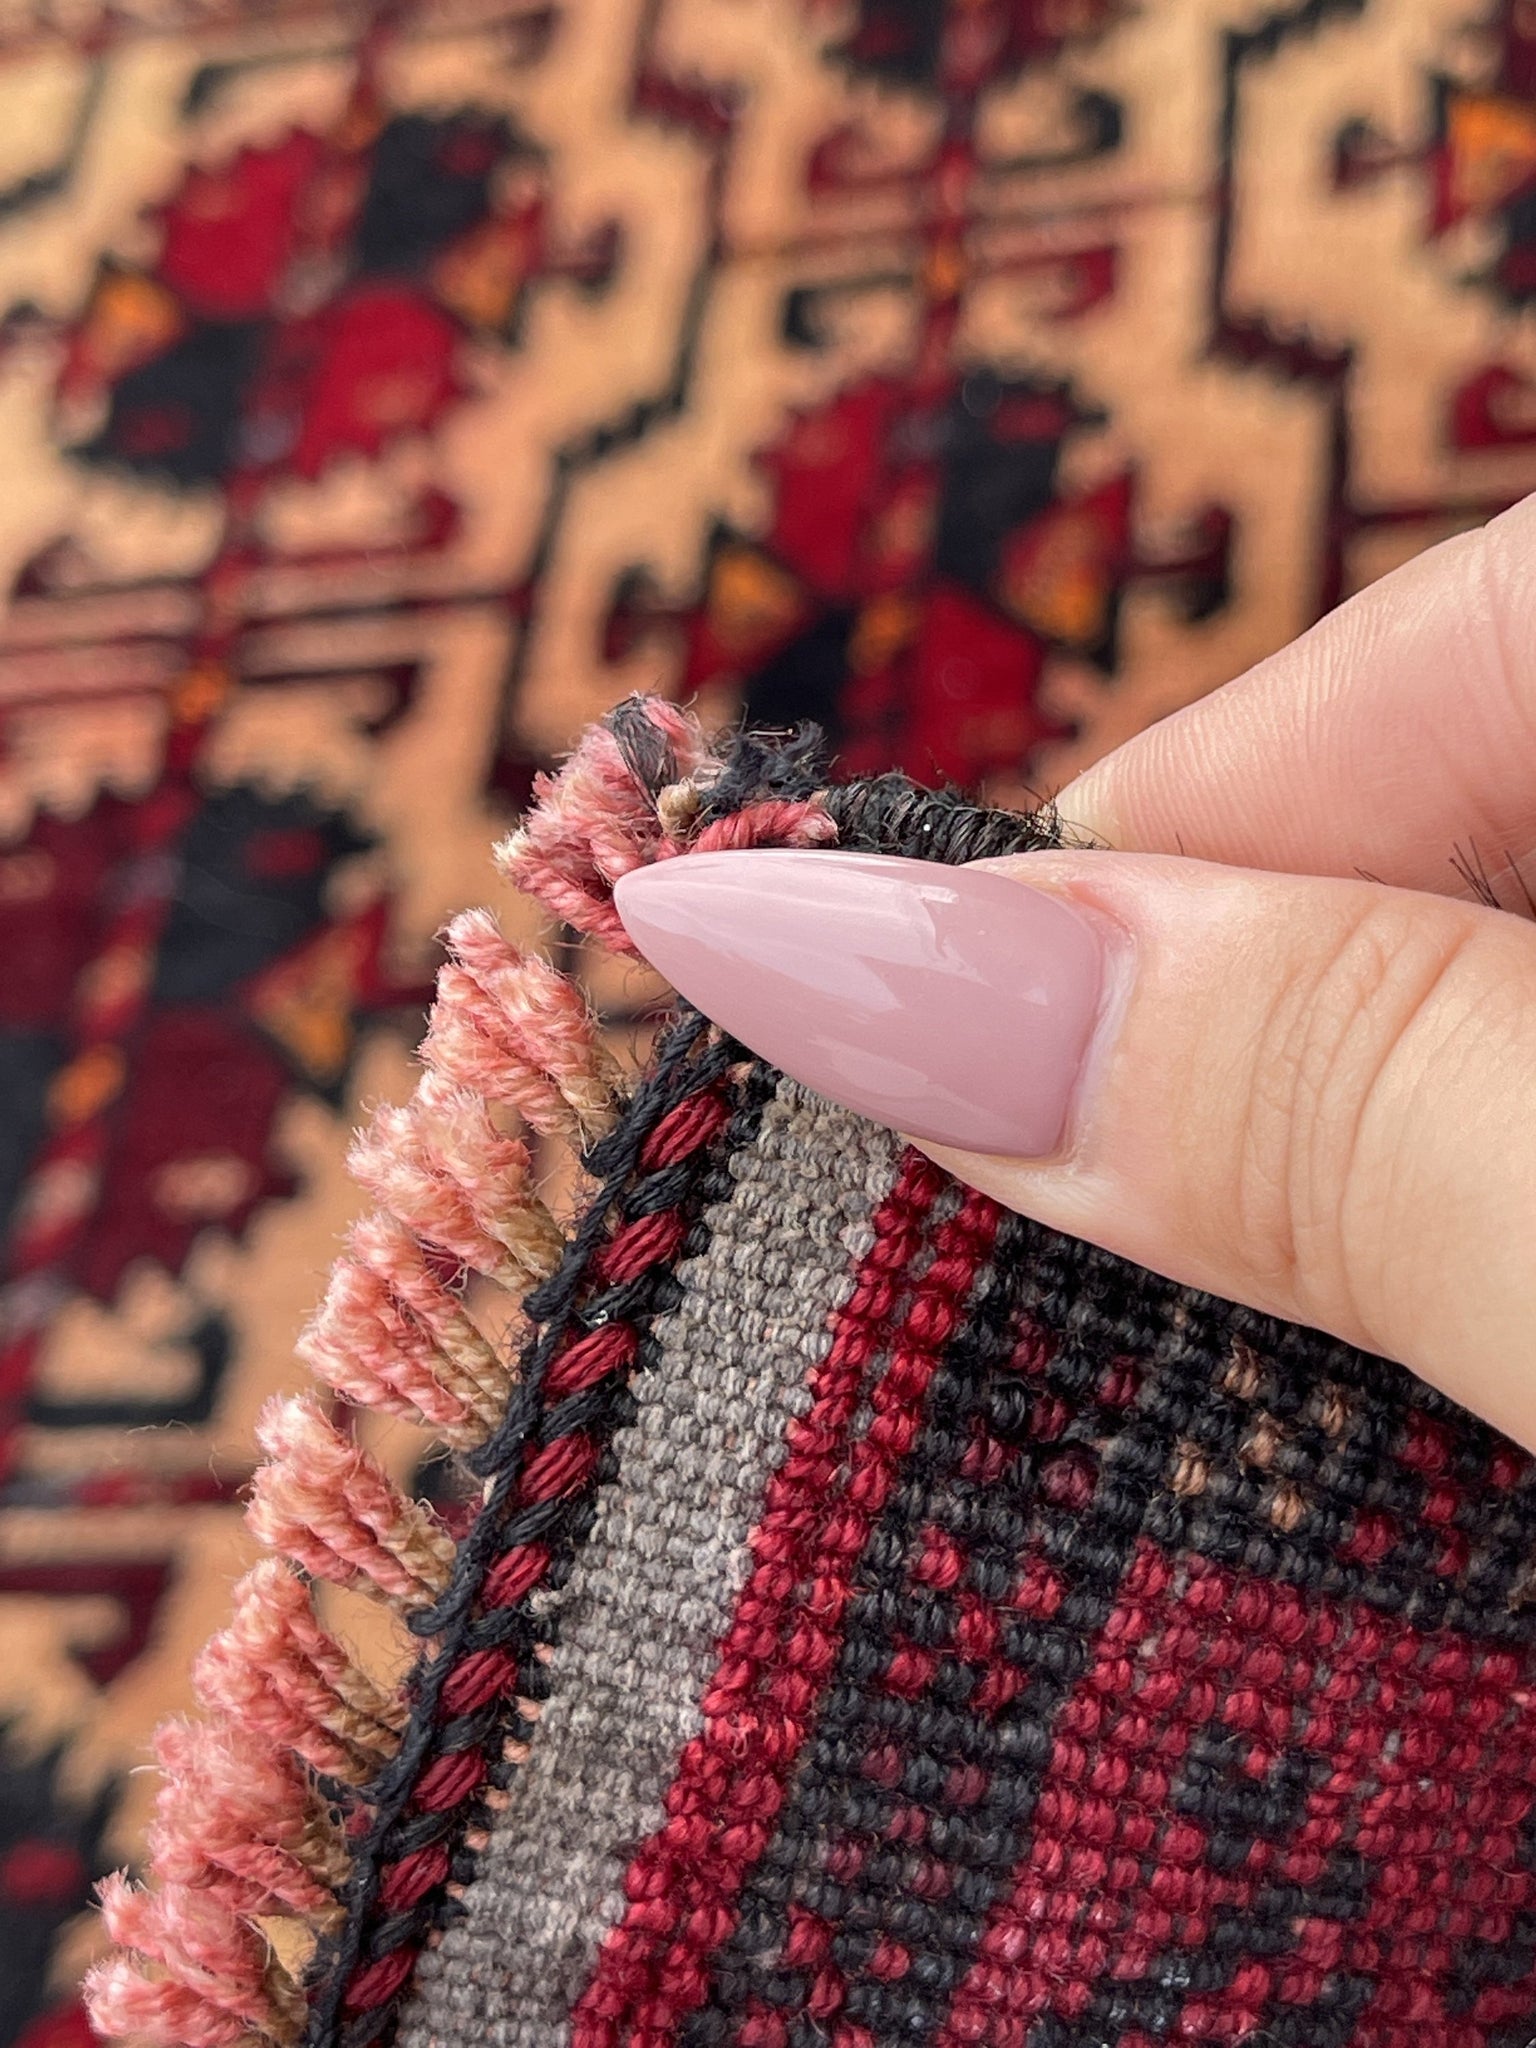 3x5 (90x150) Handmade Vintage Afghan Rug | Nomadic Baluch | Crimson Red Beige Black Orange | Boho Bohemian Tribal Turkish Moroccan Wool